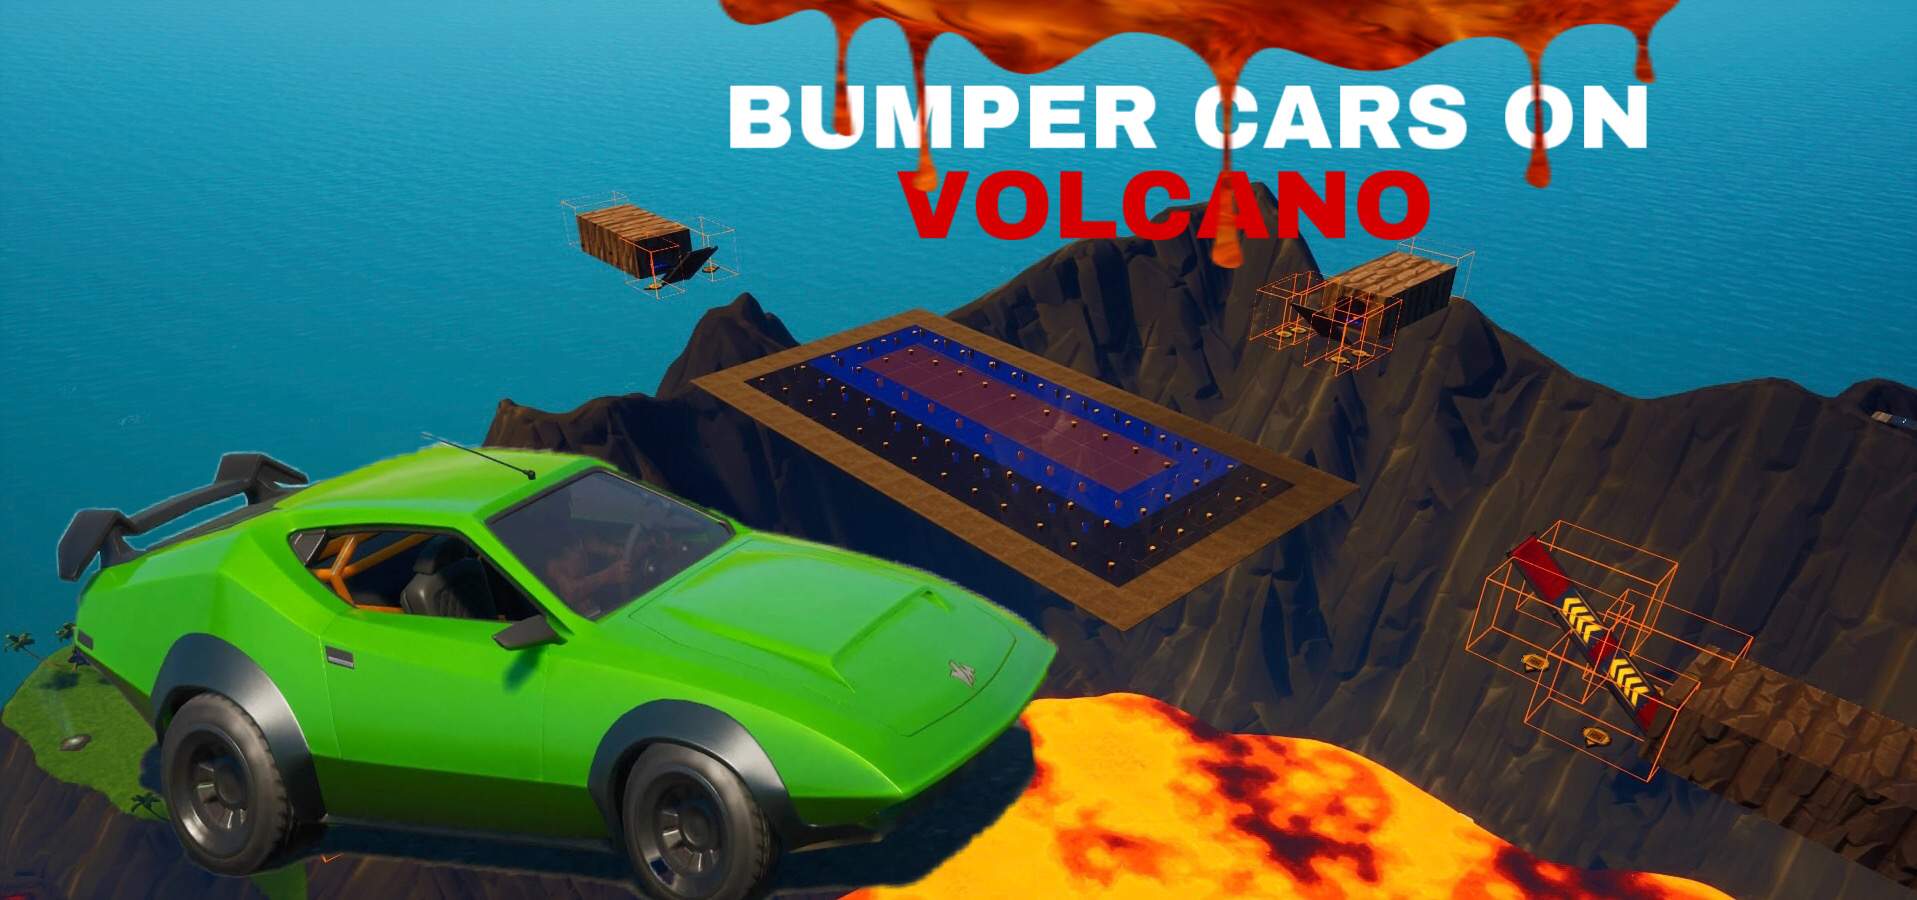 BUMPER CARS ON VOLCANO